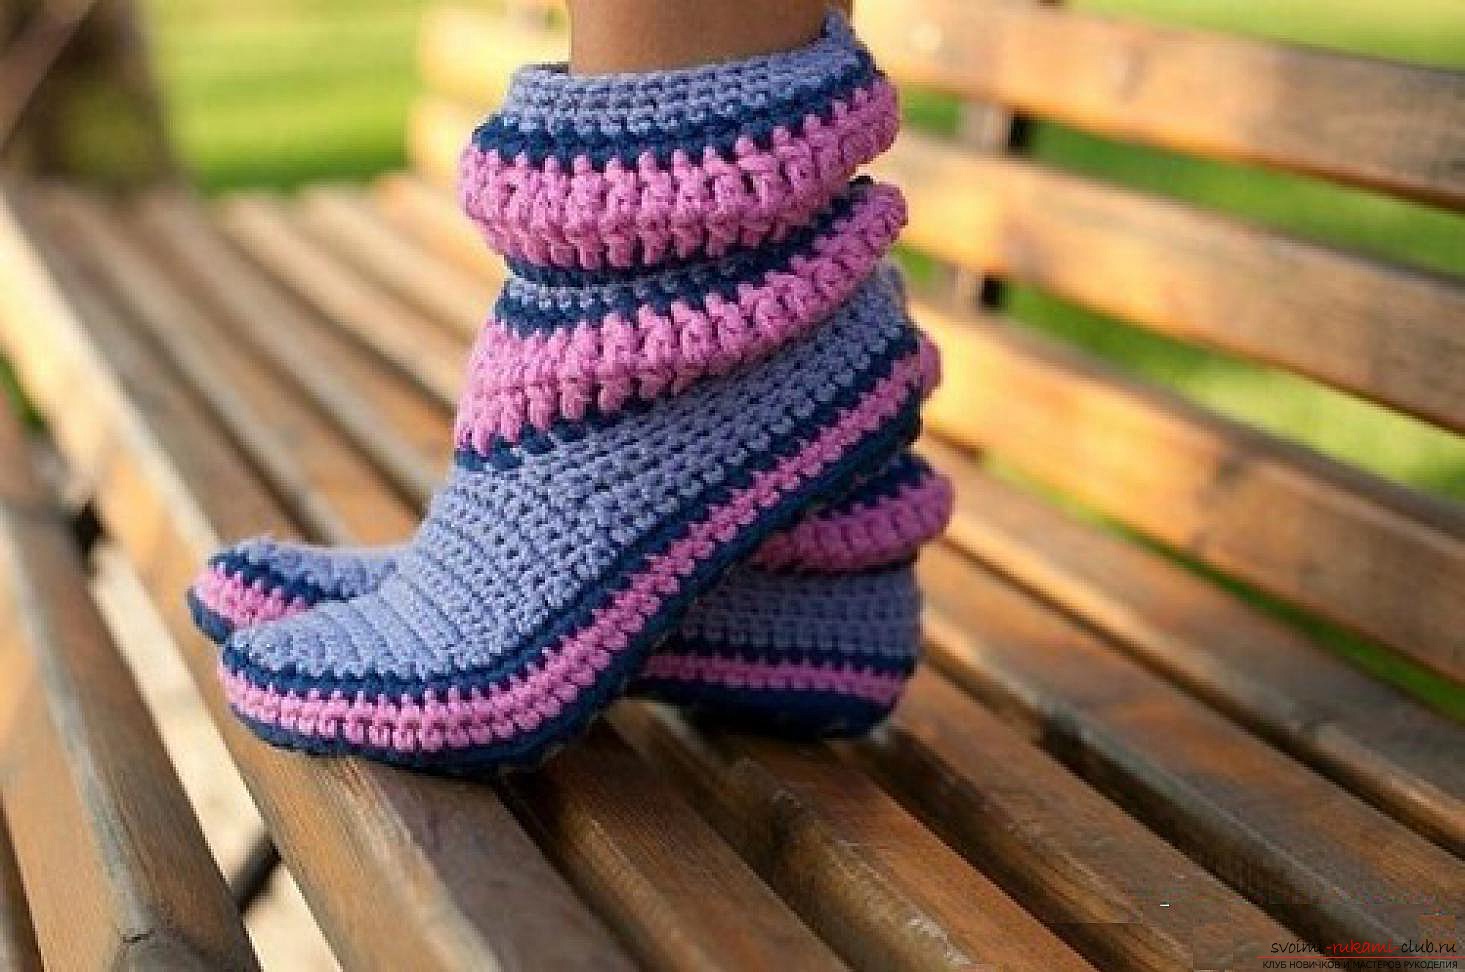 crocheted charming socks. Photo # 2